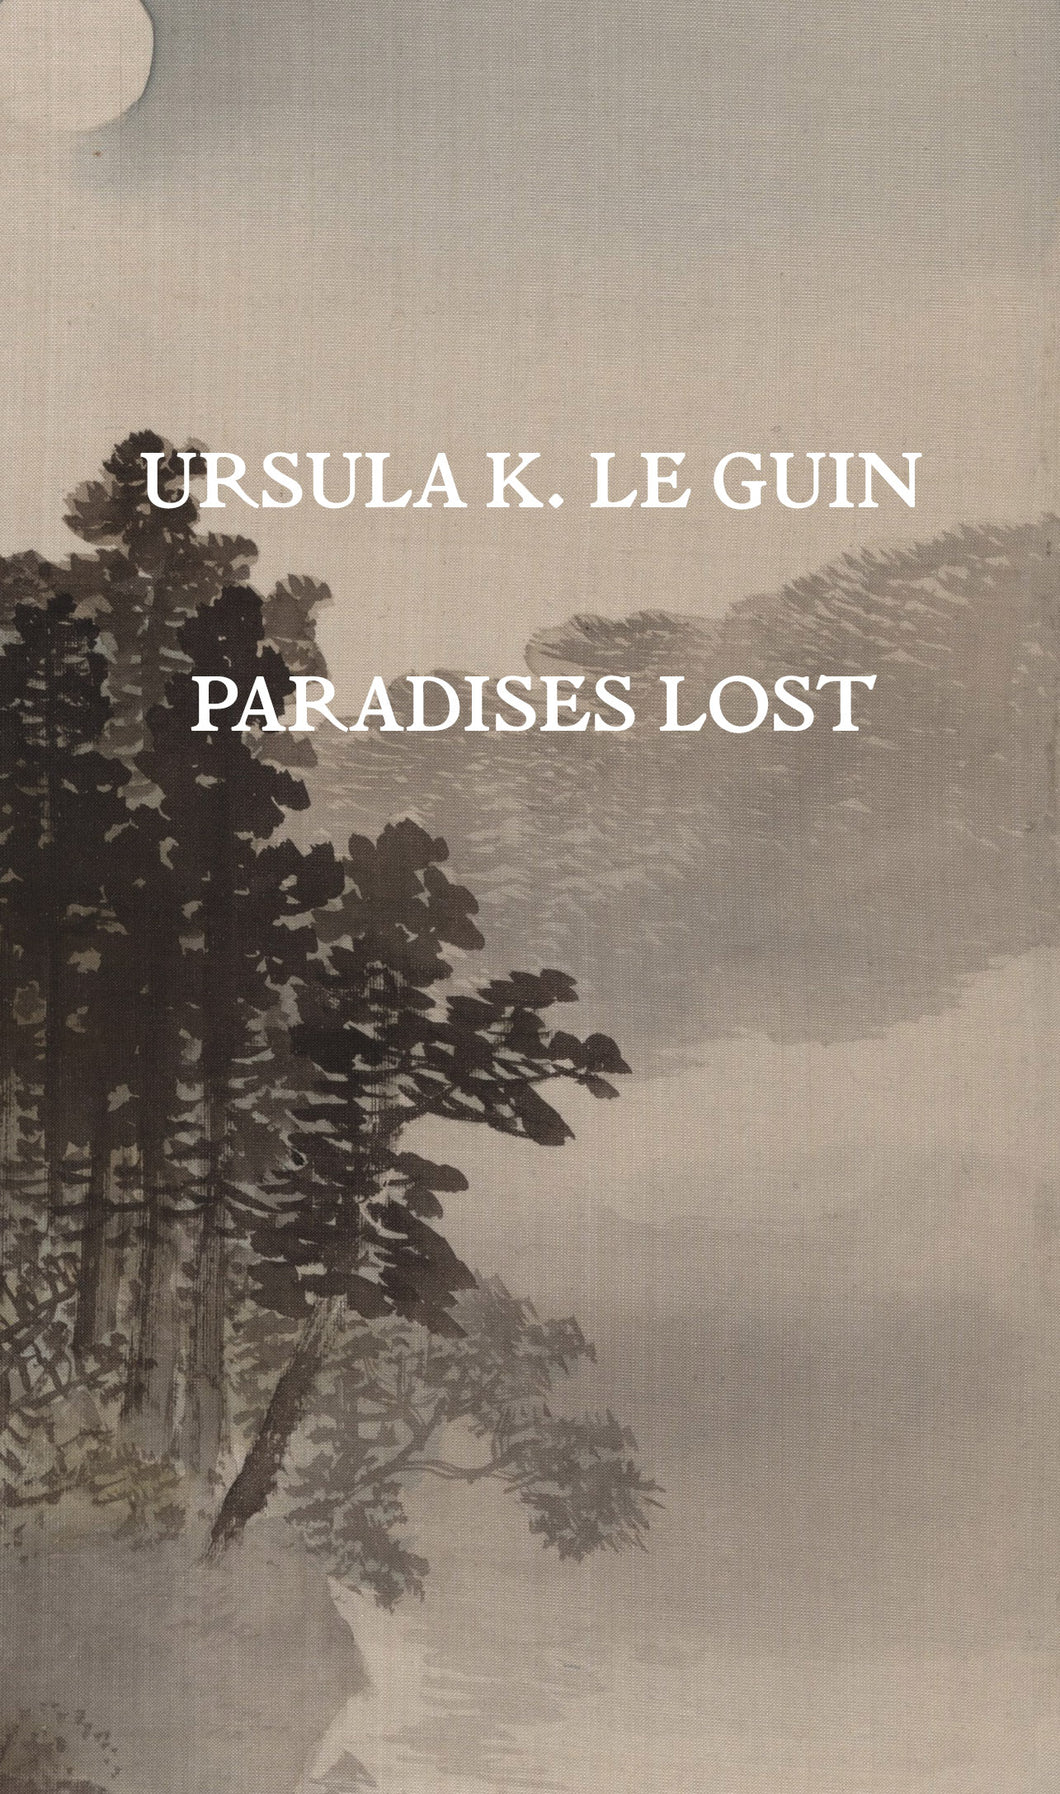 Le Guin, Ursula K.: Paradises Lost